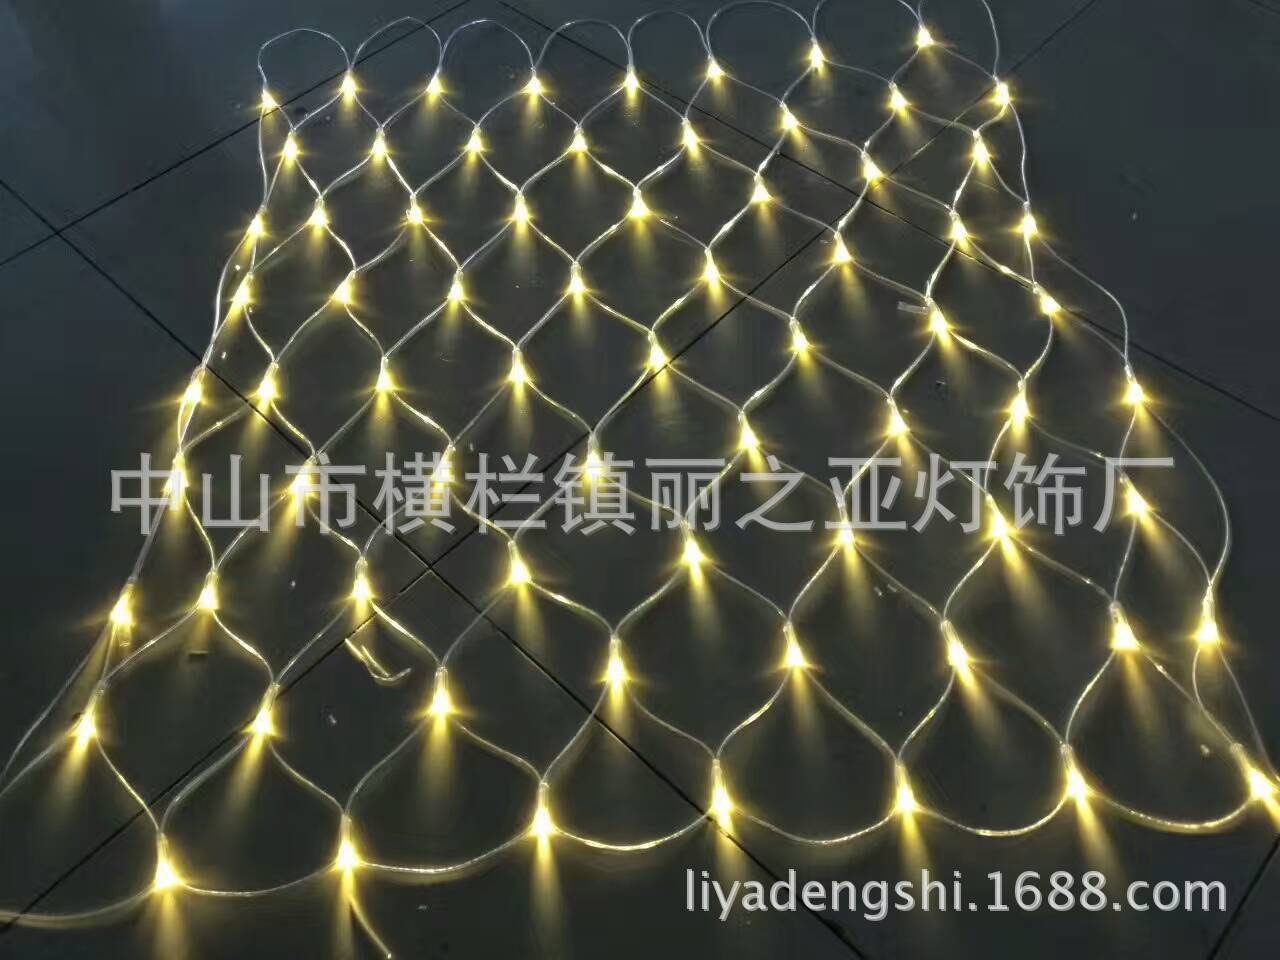 Manufactor Direct selling wholesale All kinds of grid shape Decorative lamp led Waterproof net lamp 1.5*1.5 Net